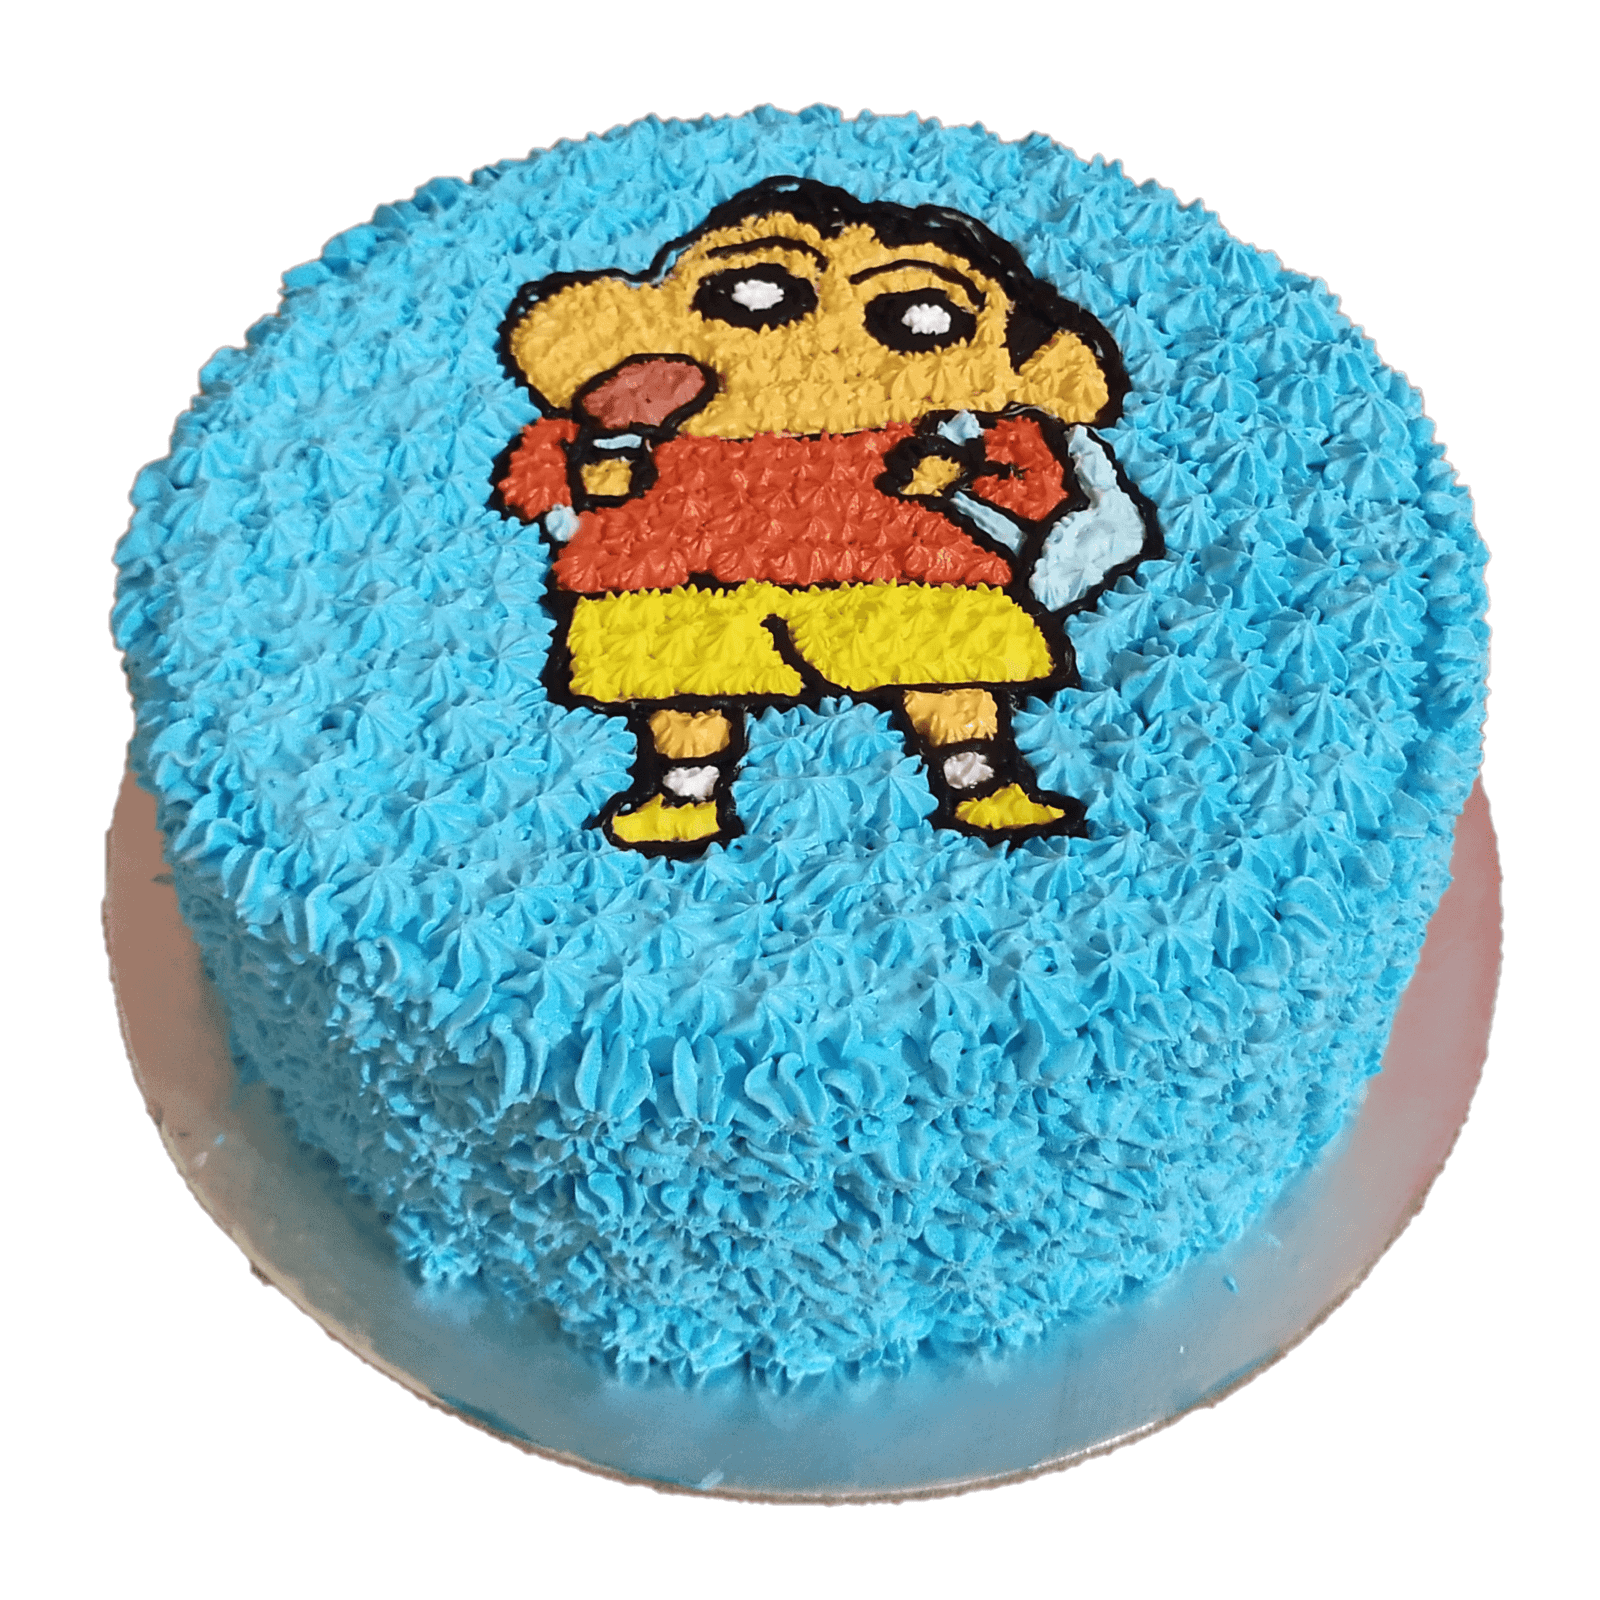 Sinchan Theme Cake|| সিনচেন থিম কেক - YouTube